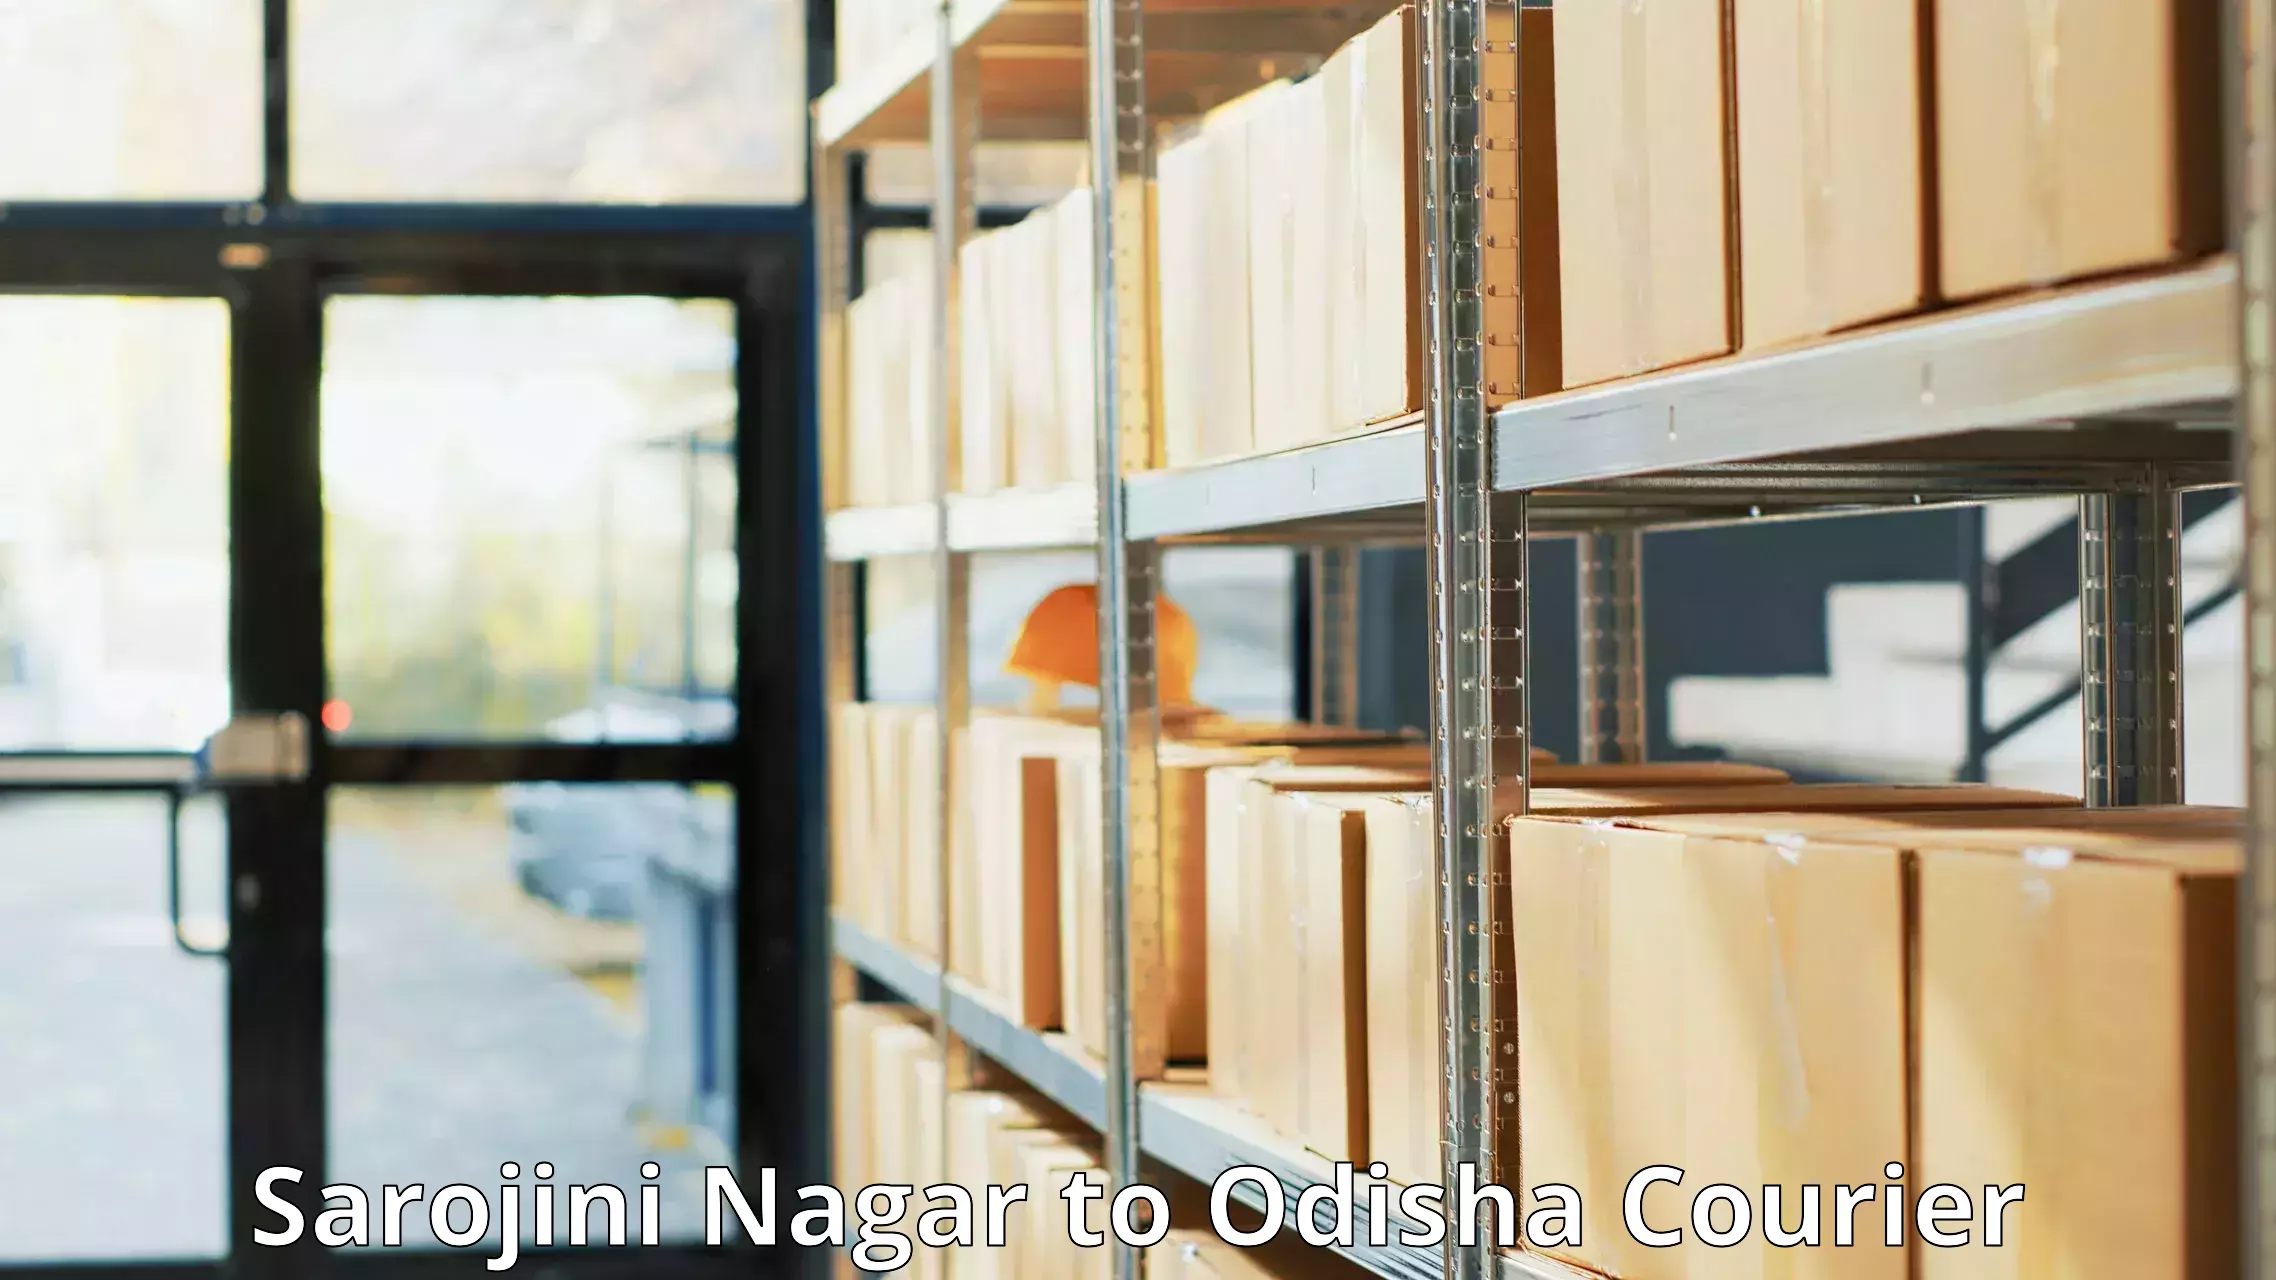 Courier service innovation Sarojini Nagar to Dhamanagar